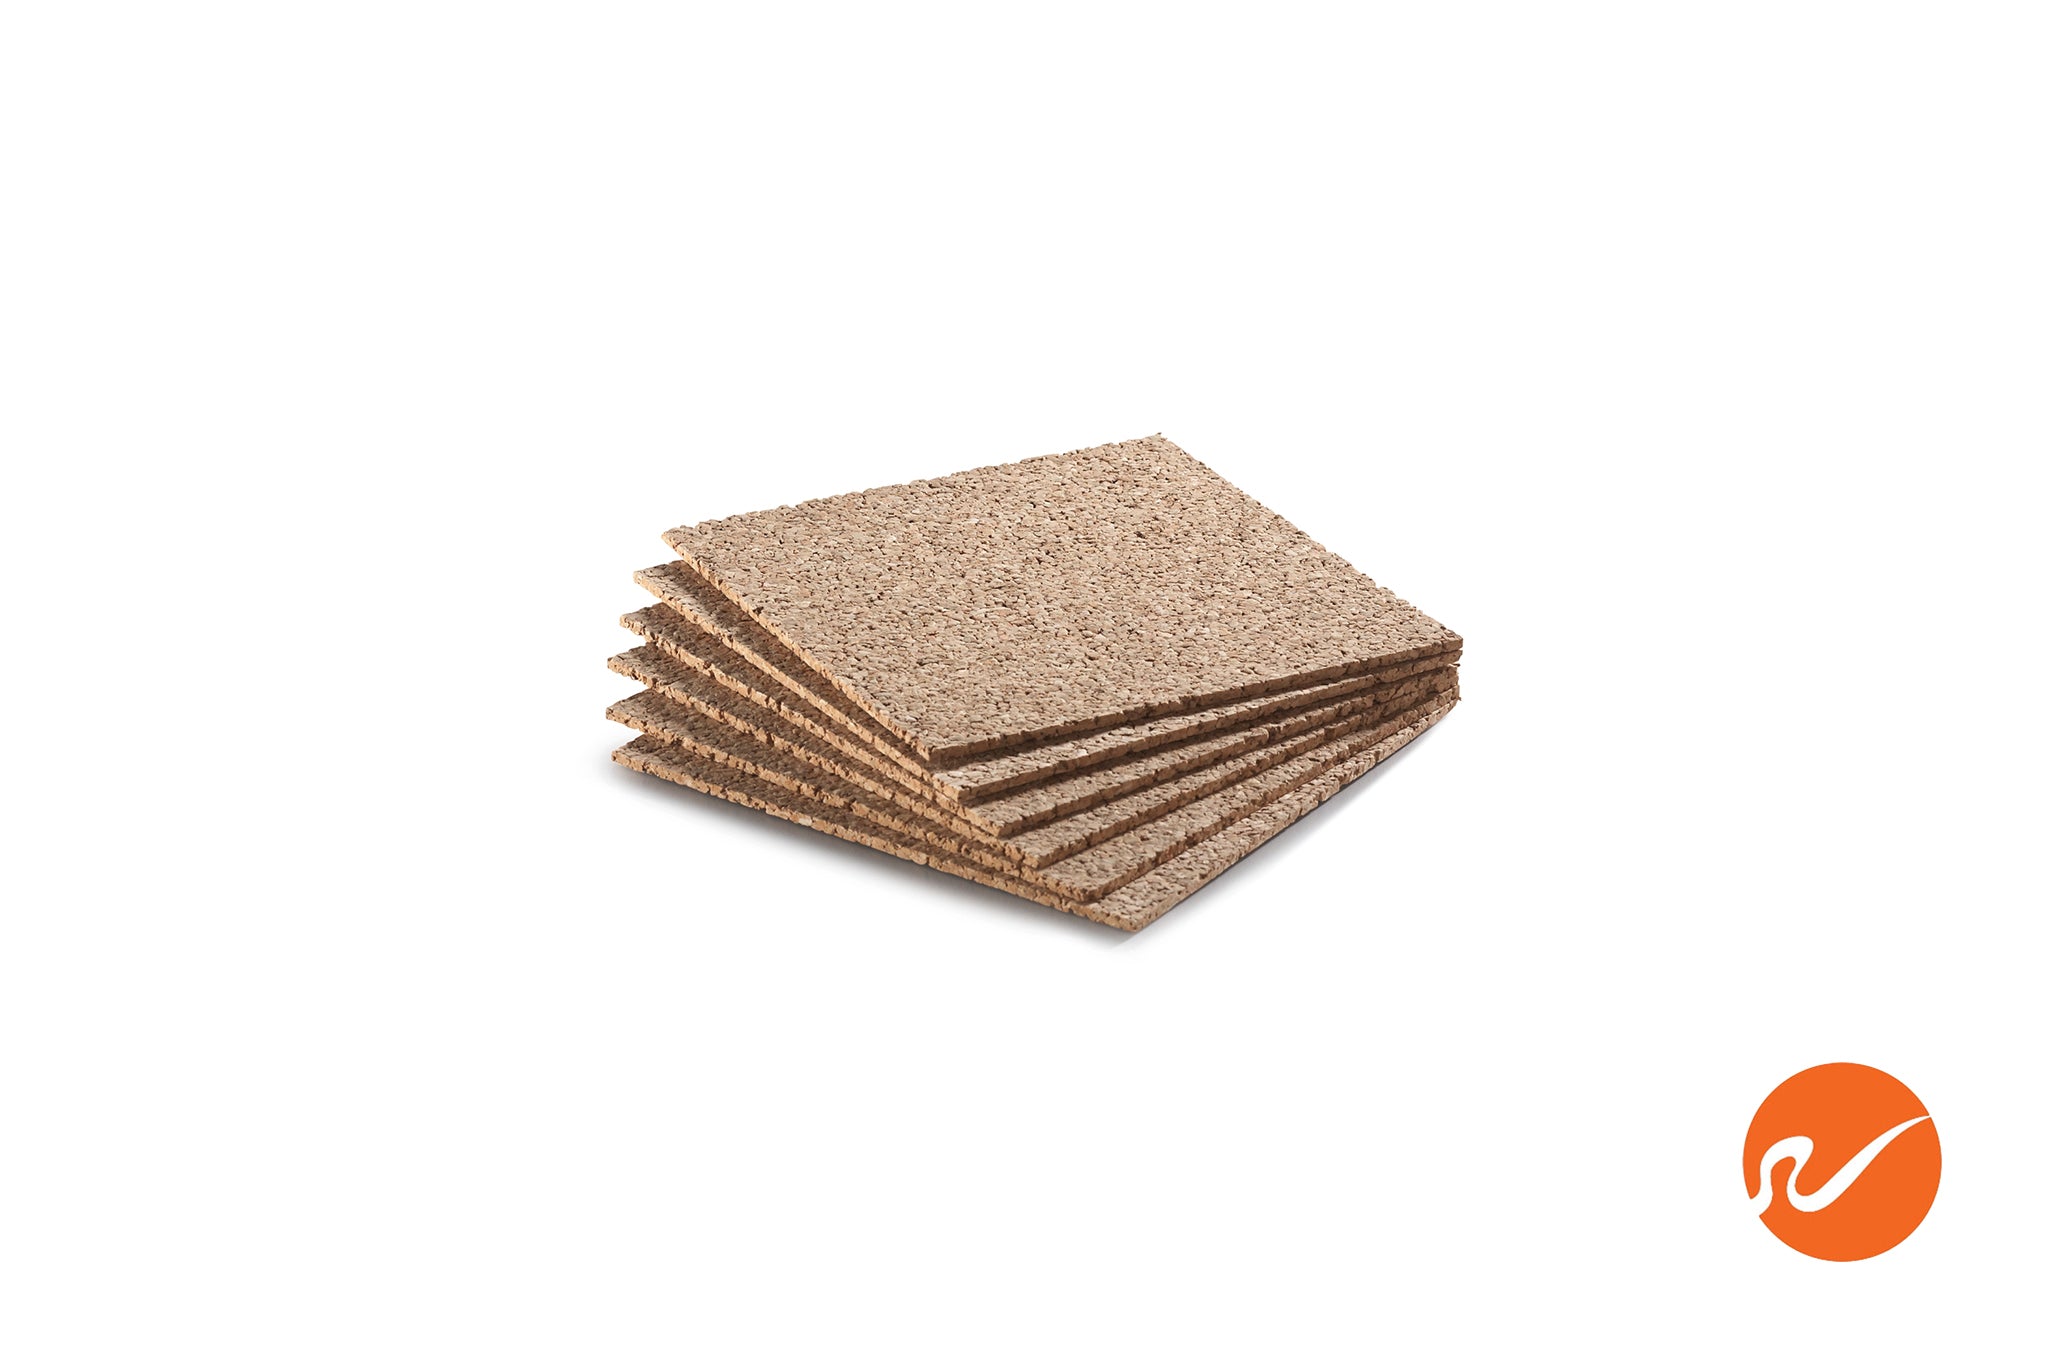 3/8 x 9 Cork Squares - buy cork pads, trivets